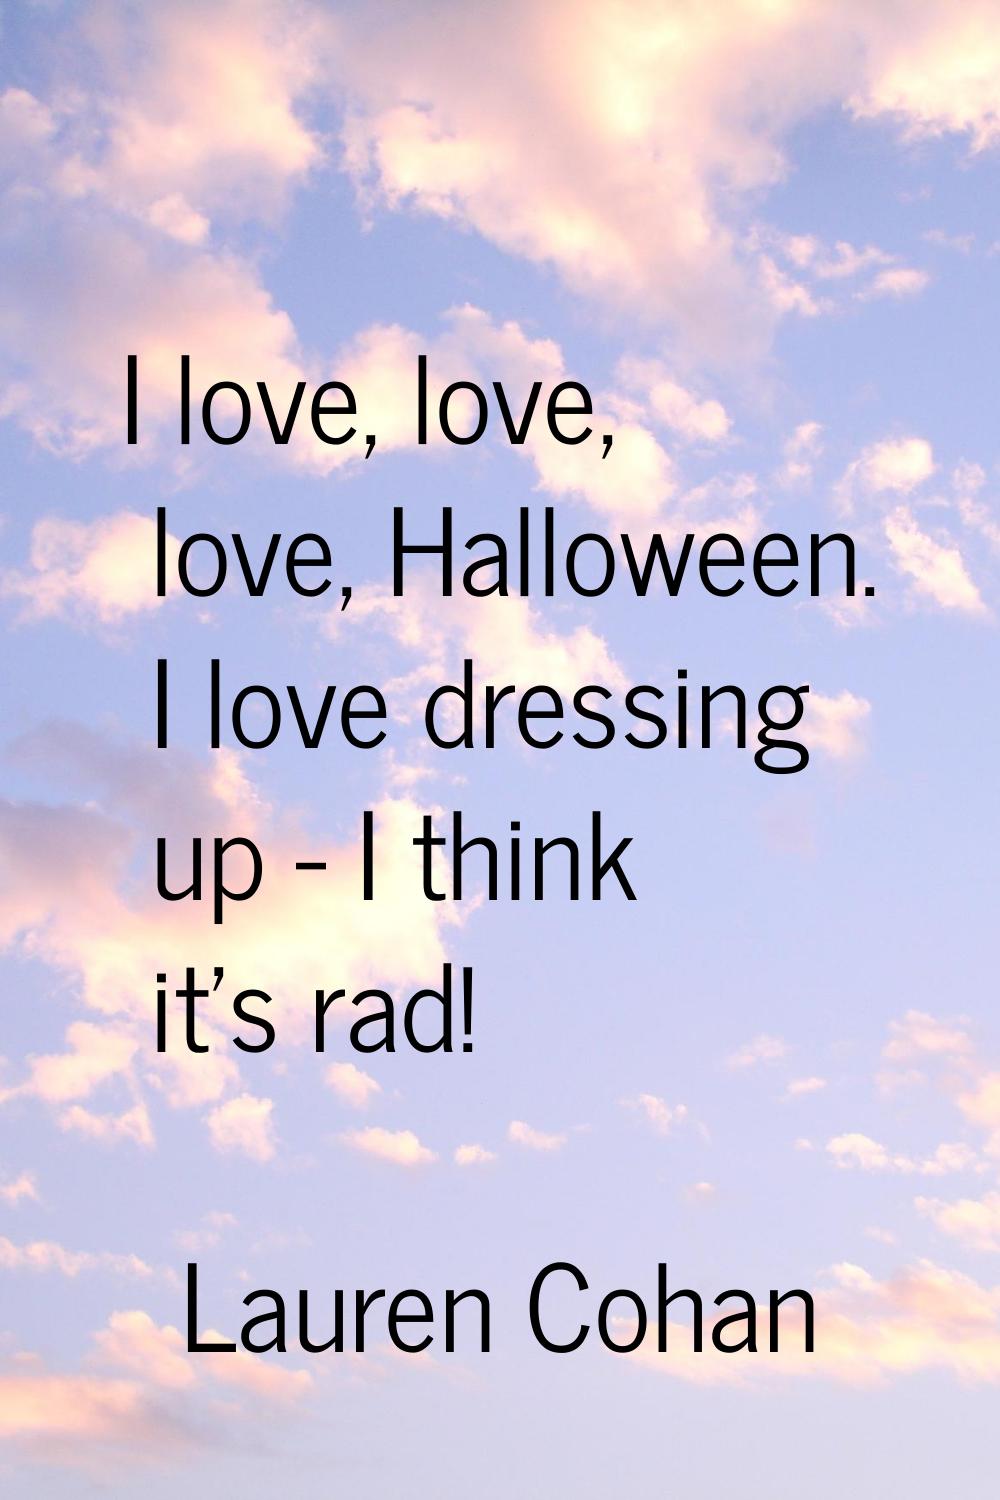 I love, love, love, Halloween. I love dressing up - I think it's rad!